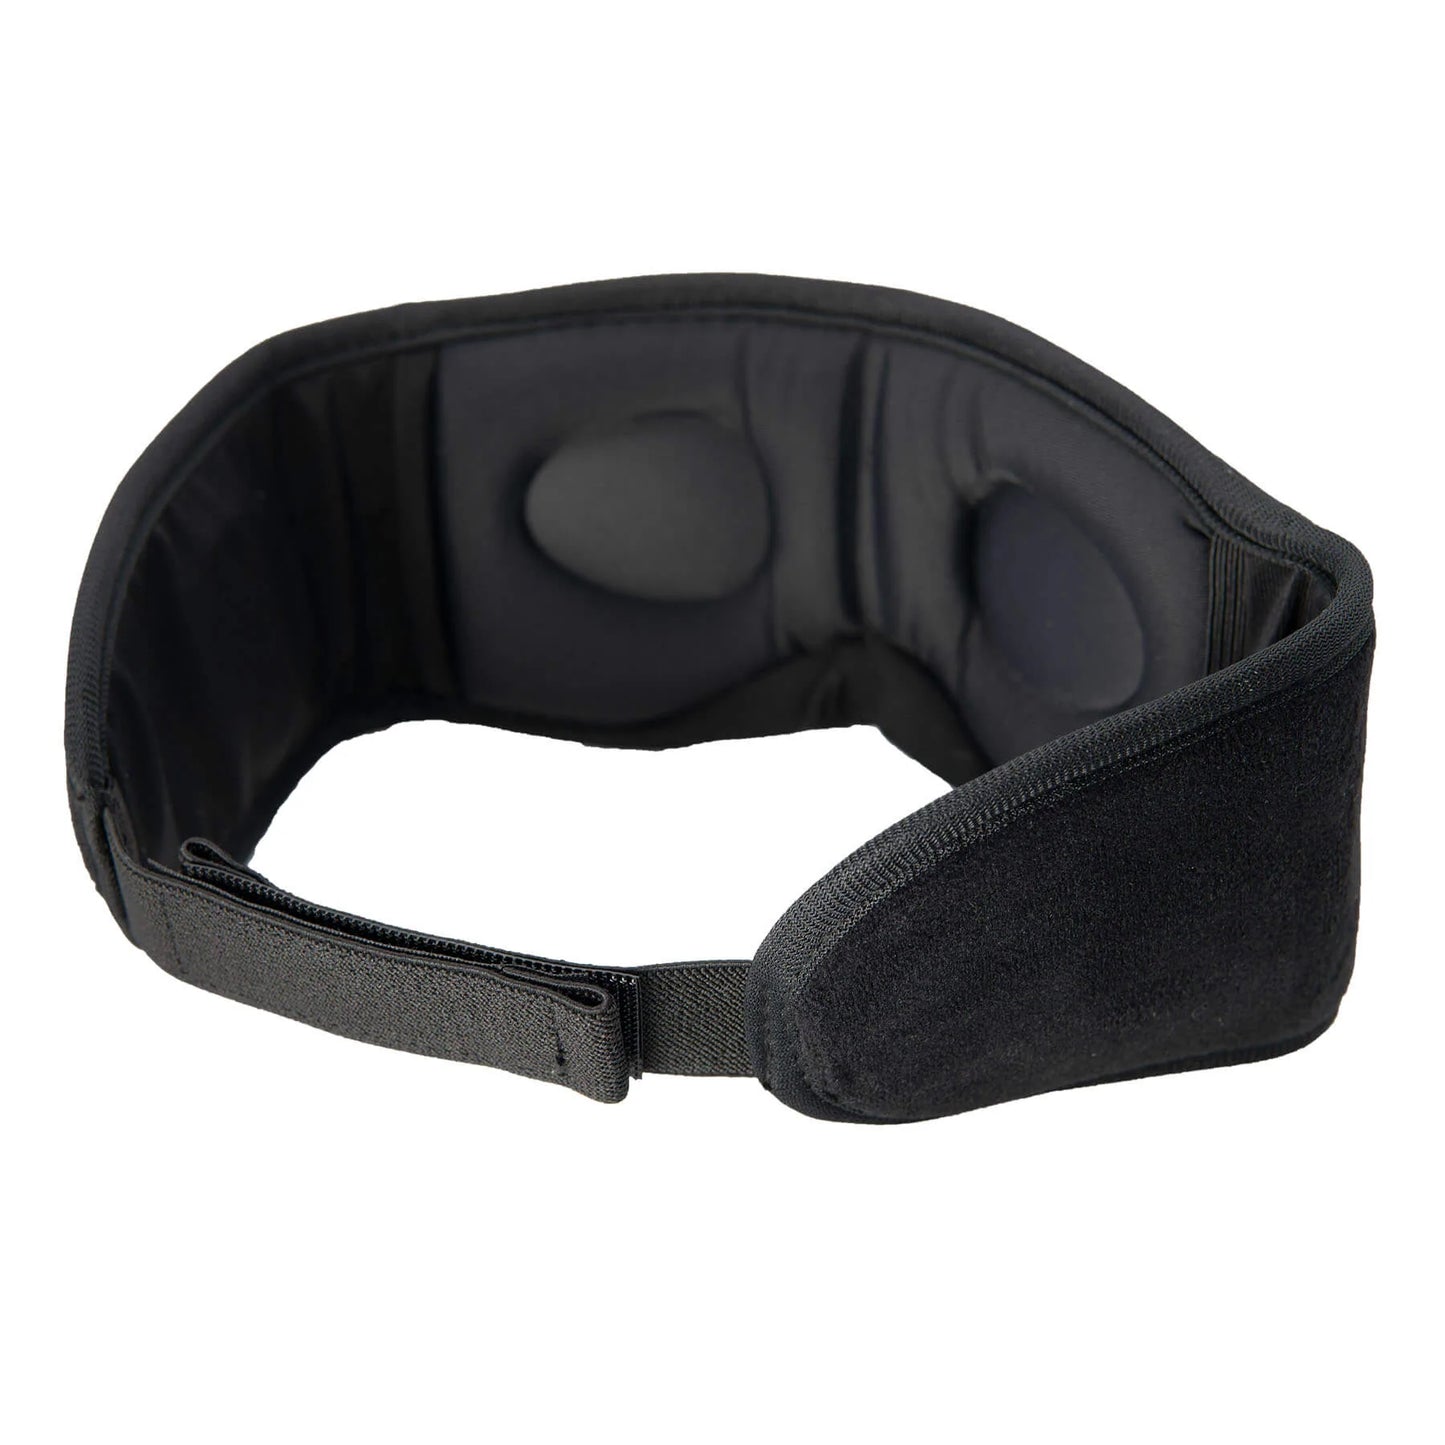 Bonarelax Bluetooth Headphone Eye Mask bonarelax | Bluetooth Eye Mask